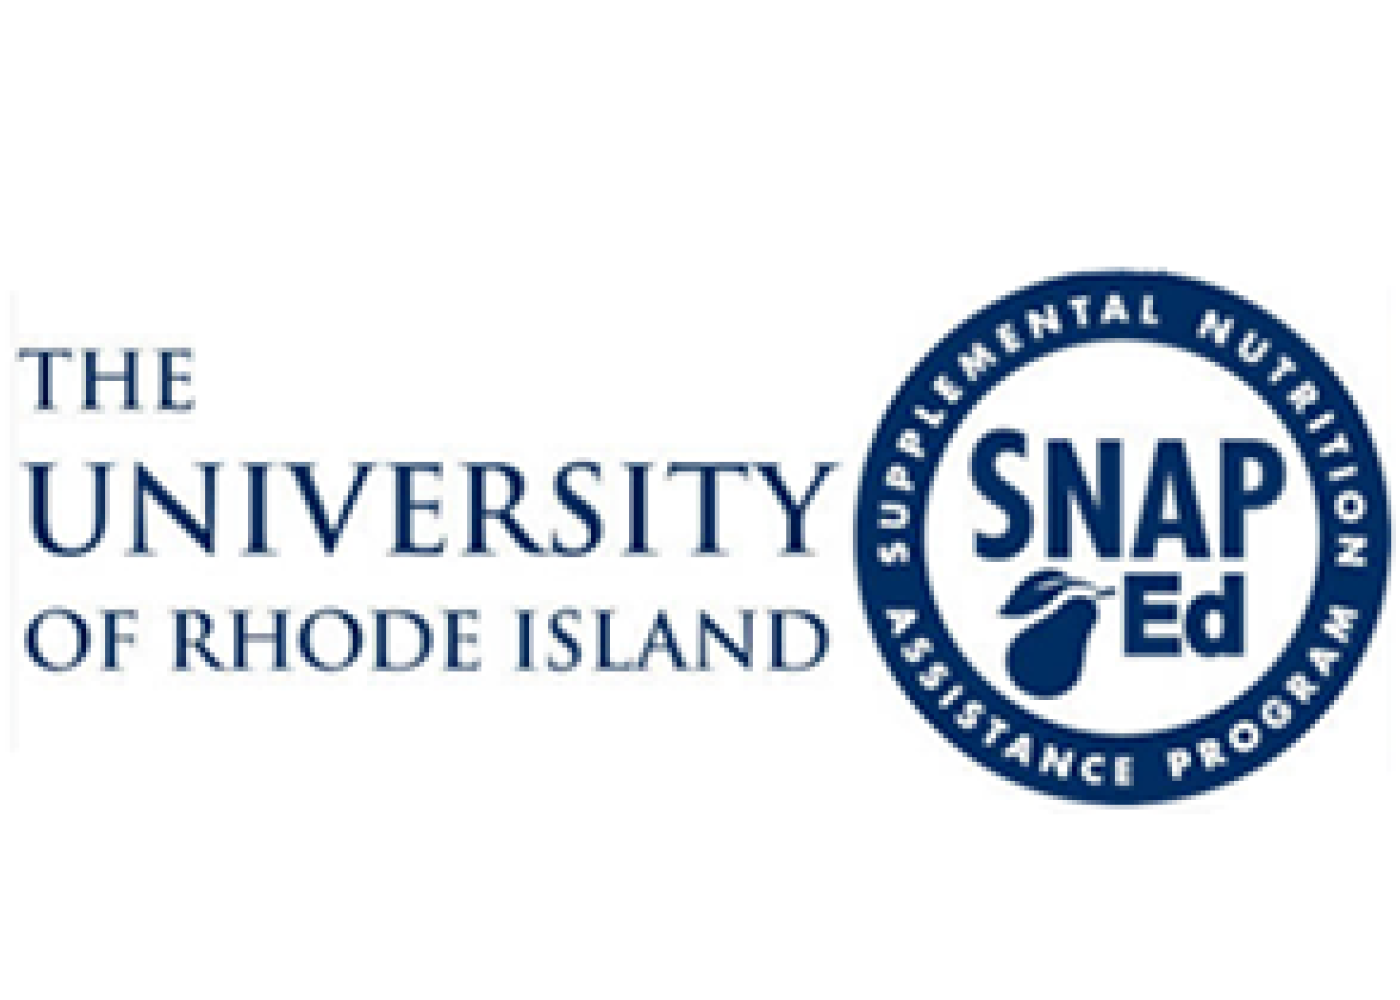 The Unversity of Rhode Island SNAP Ed Supplemental Nutrition Assistance Program